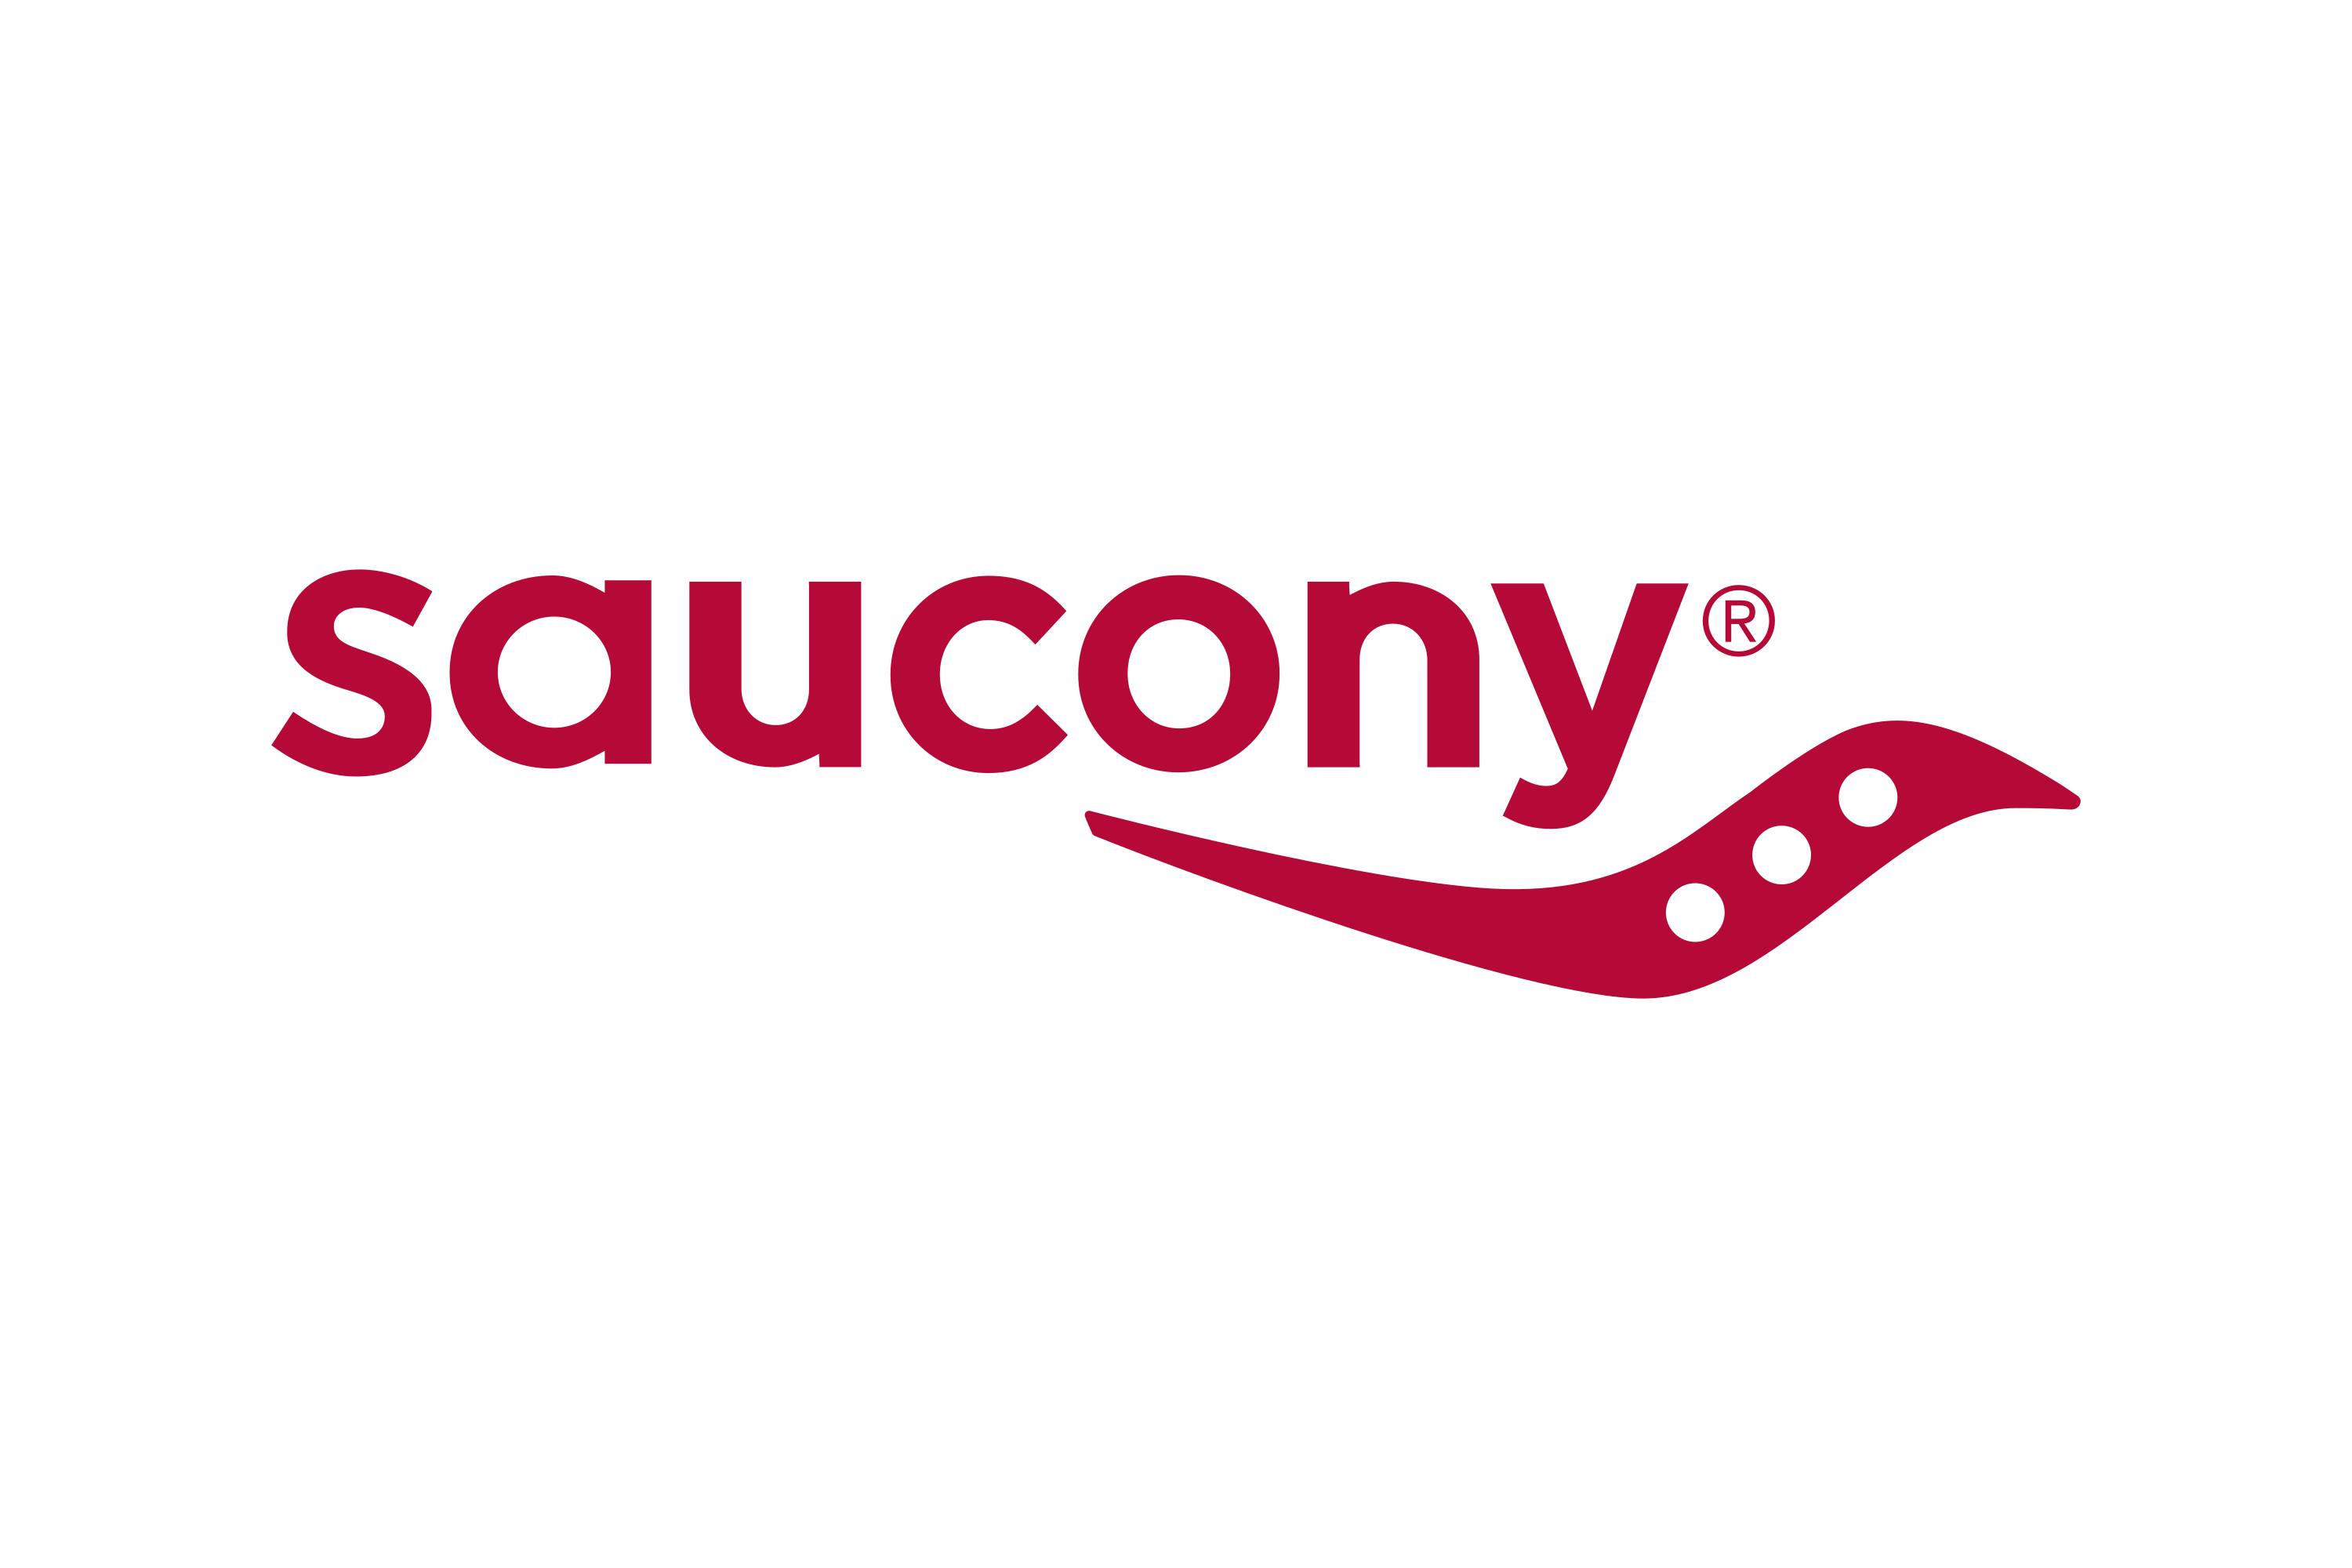 Download Saucony Logo in SVG Vector or PNG File Format - Logo.wine